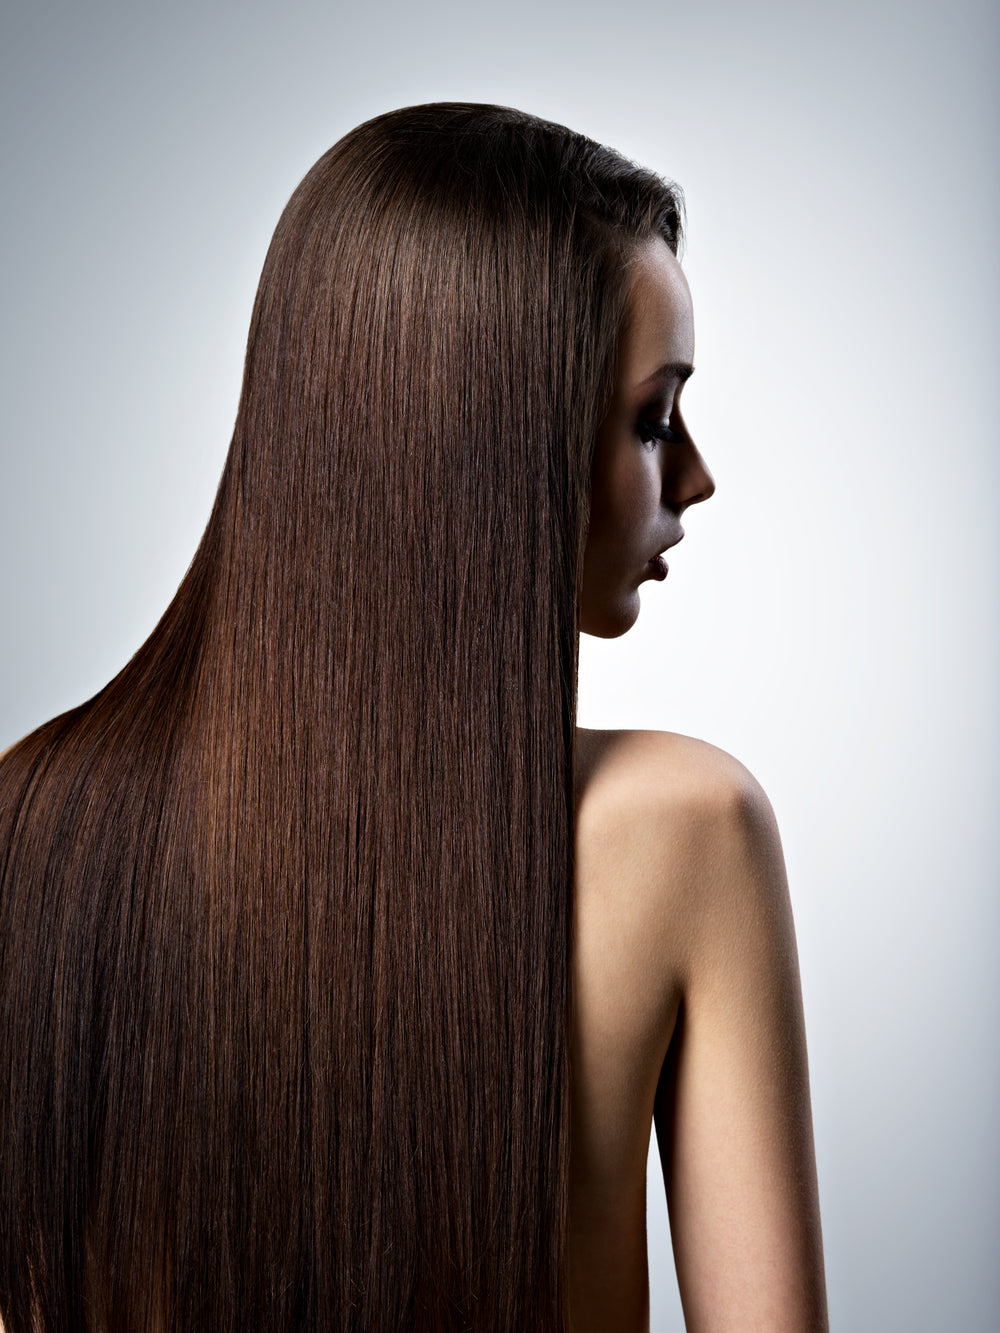 woman's long shiny hair